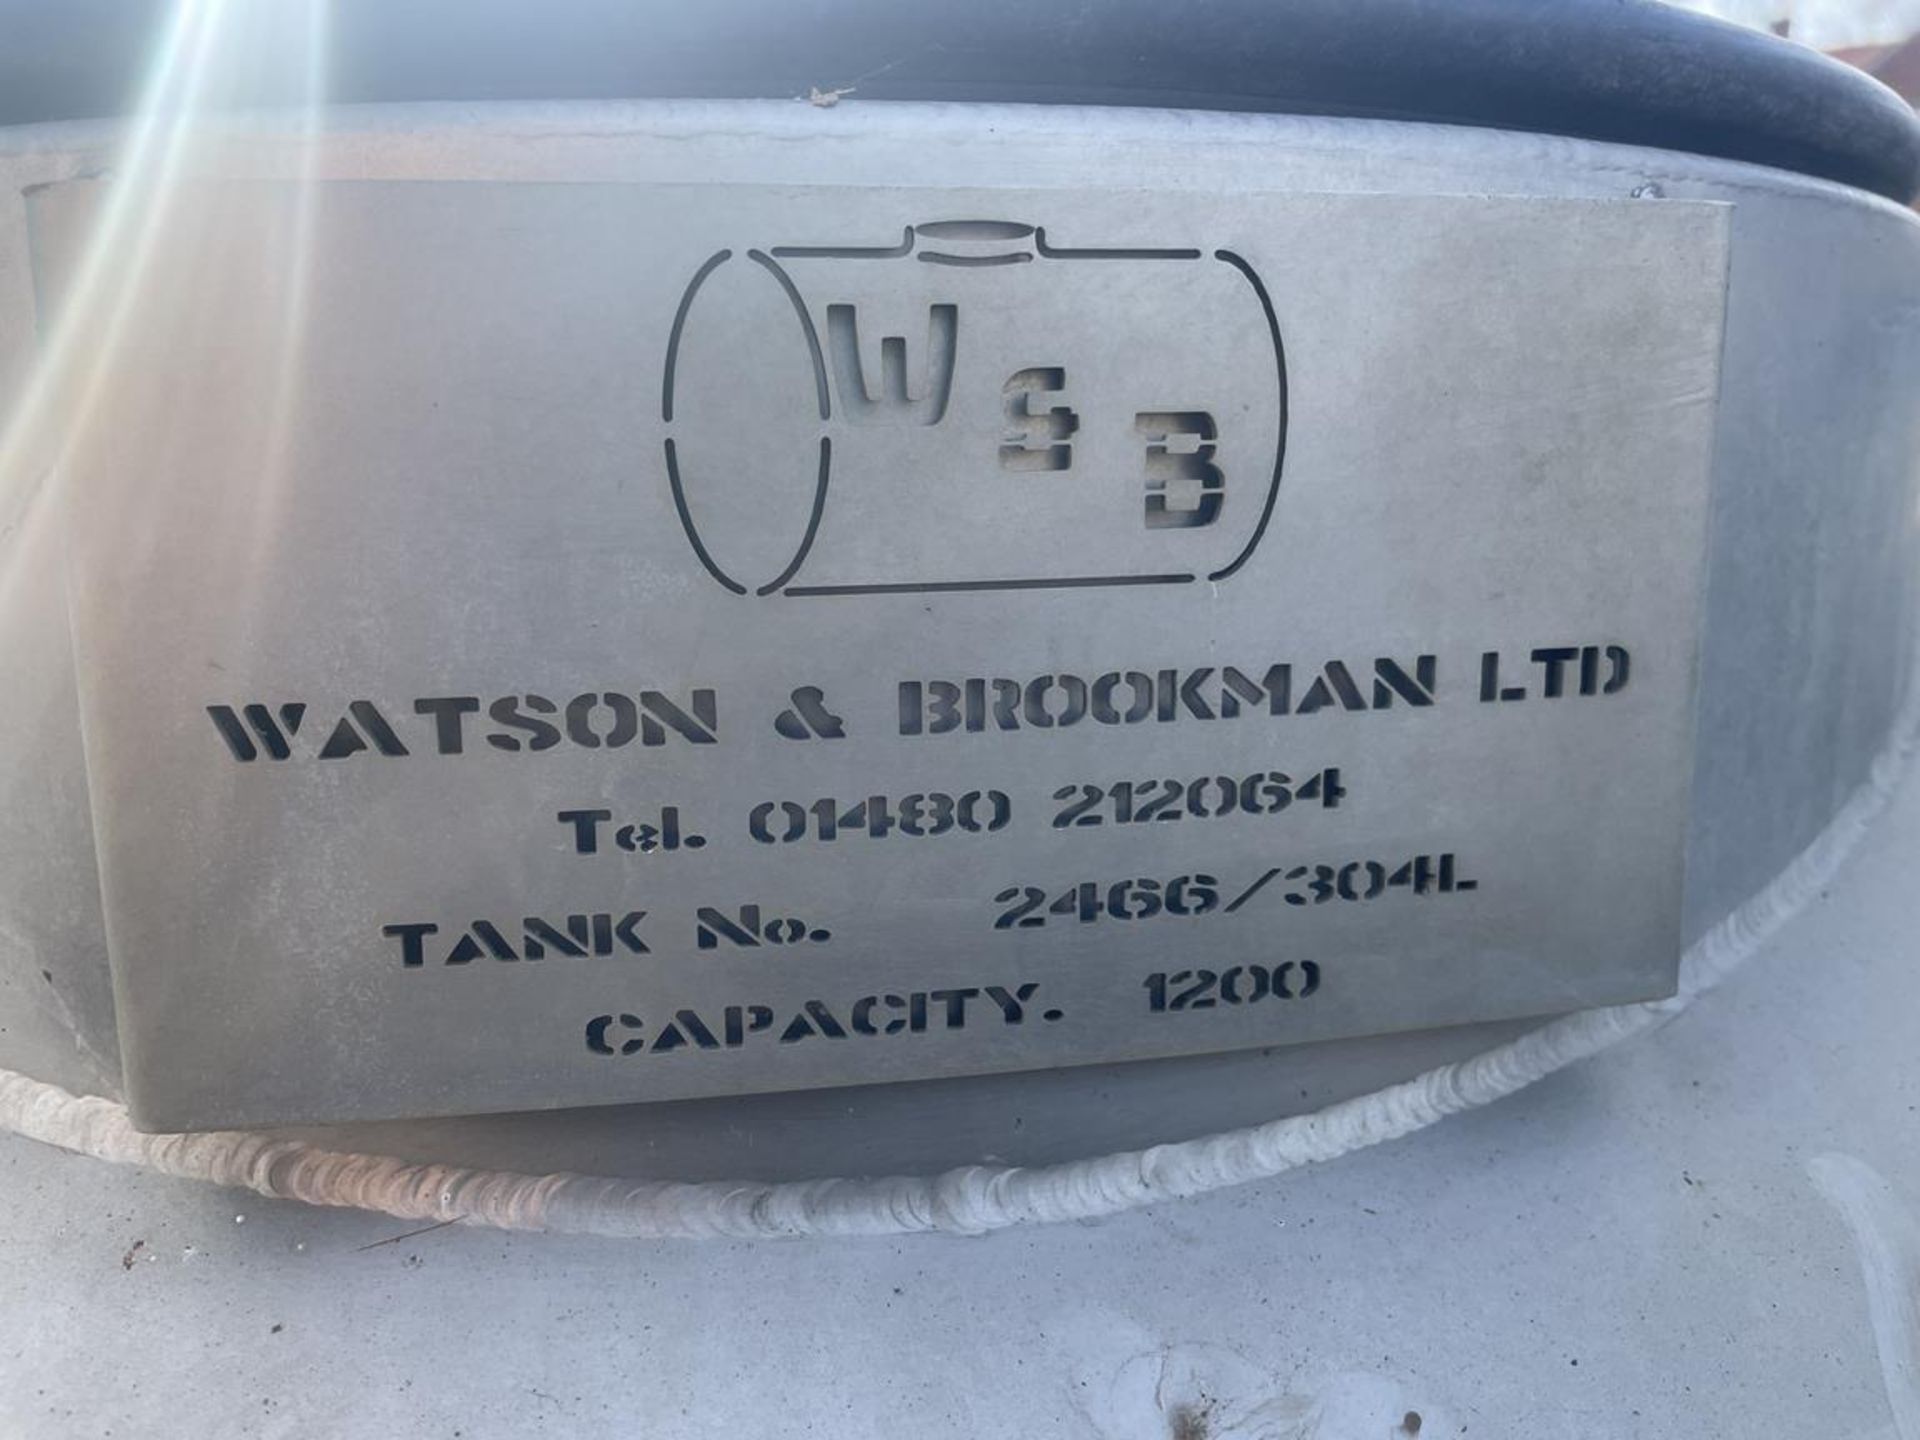 S & K Liquid Fertiliser Tank by Watson and Brookman, Tank No. 2466/304L, Capacity 1200 Litres, - Image 4 of 5